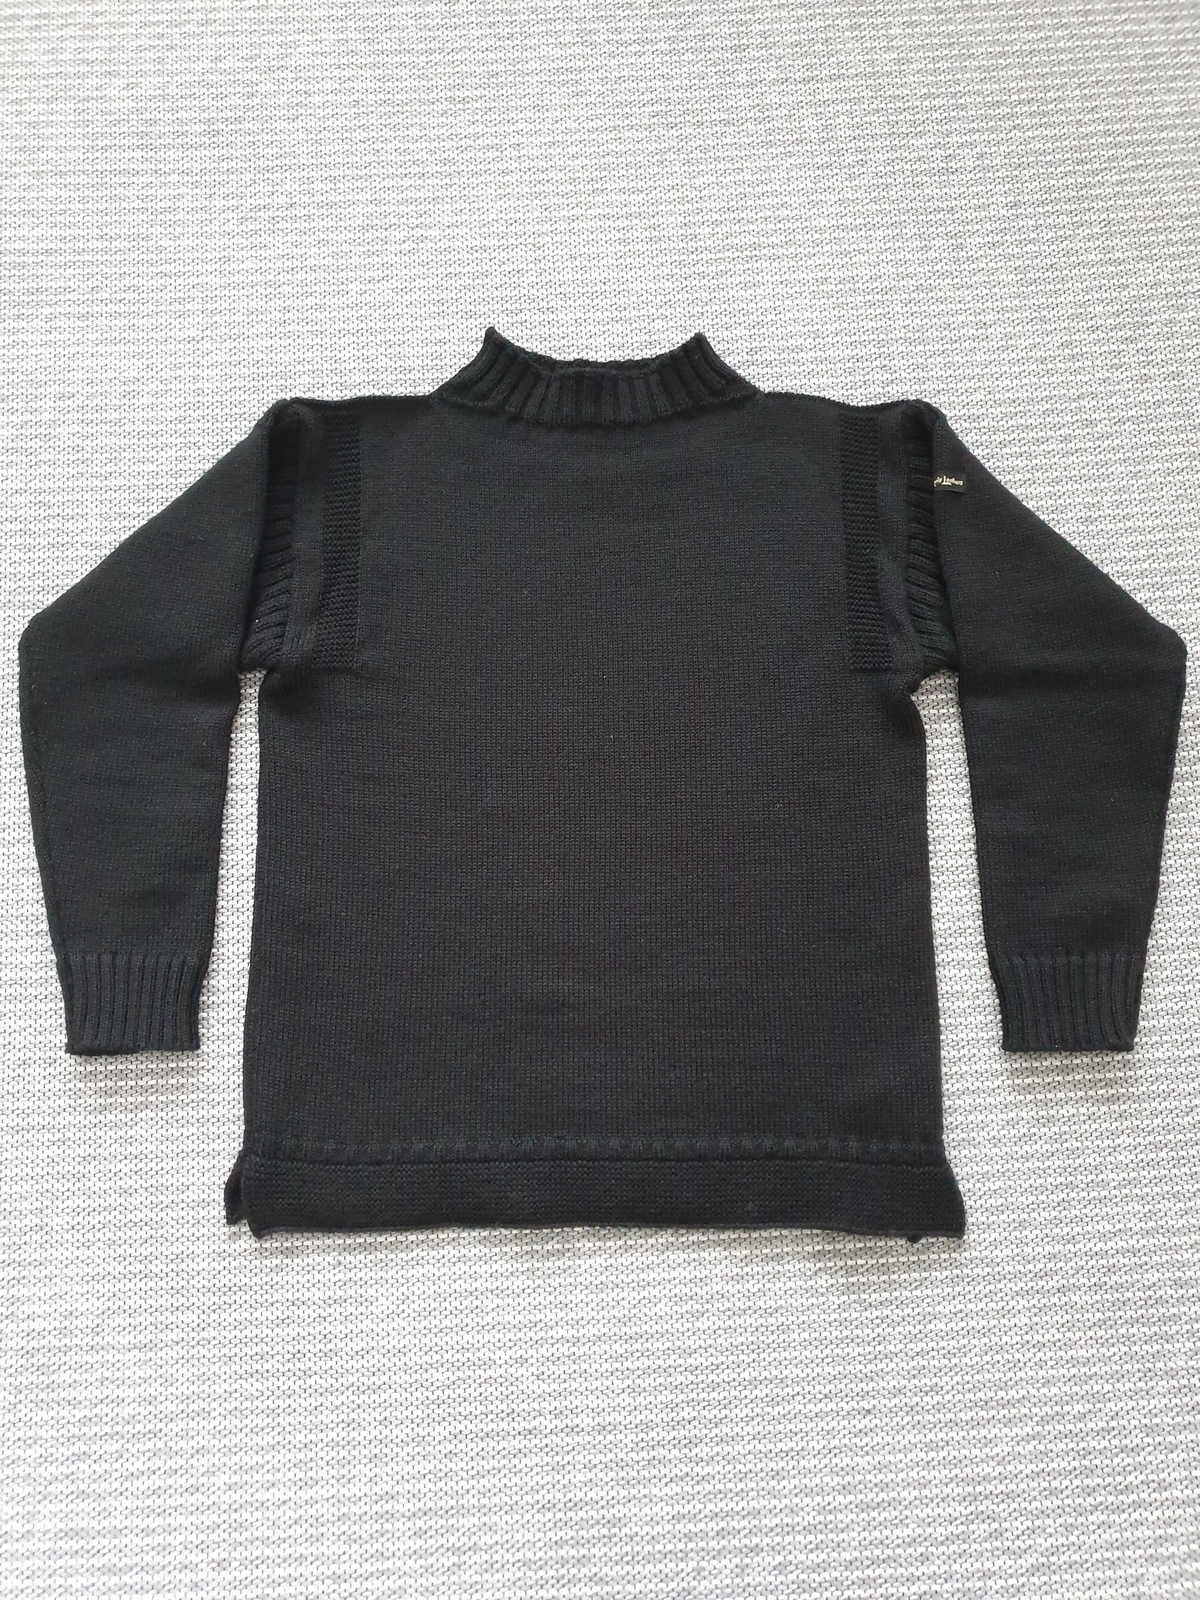 sweater1.jpg